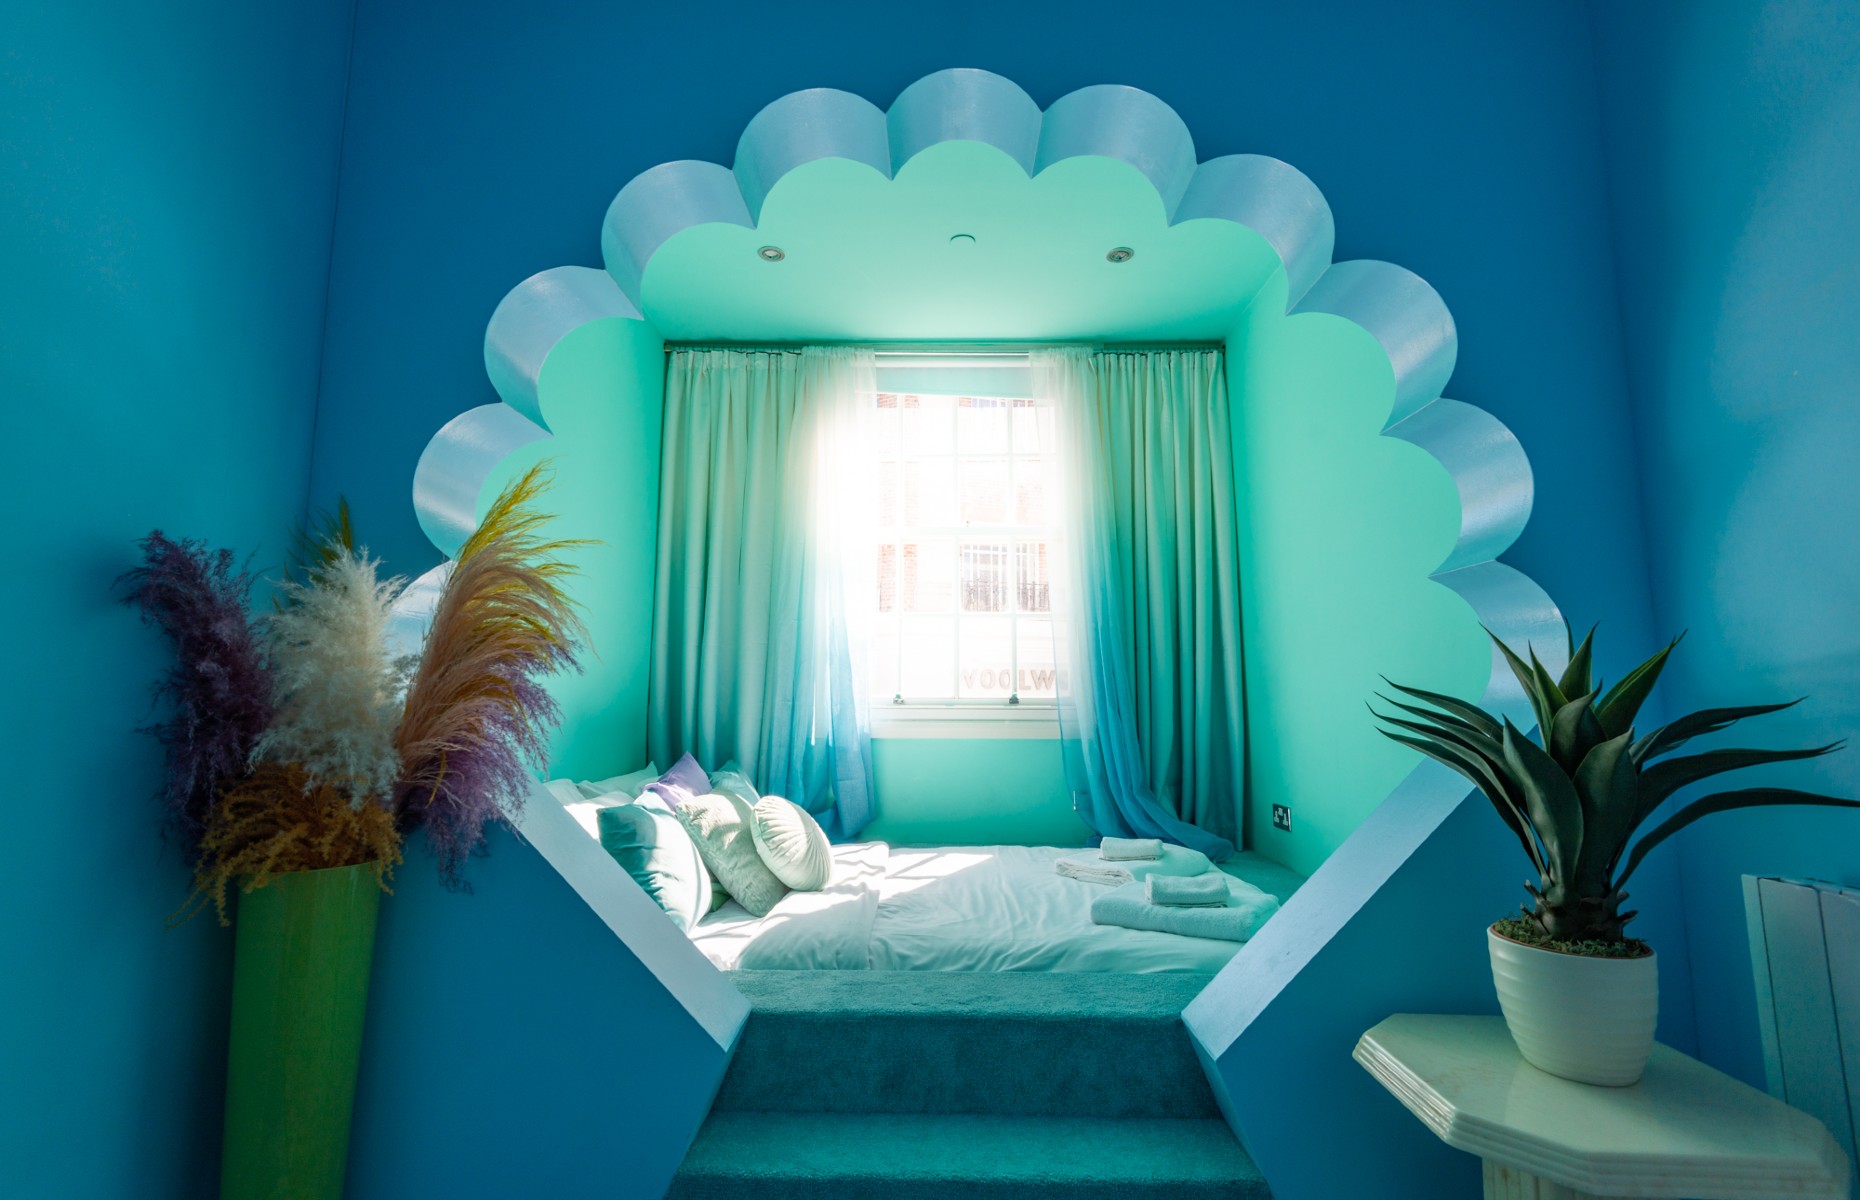 Margate Suites bedroom (Image: Diana Jarvis)